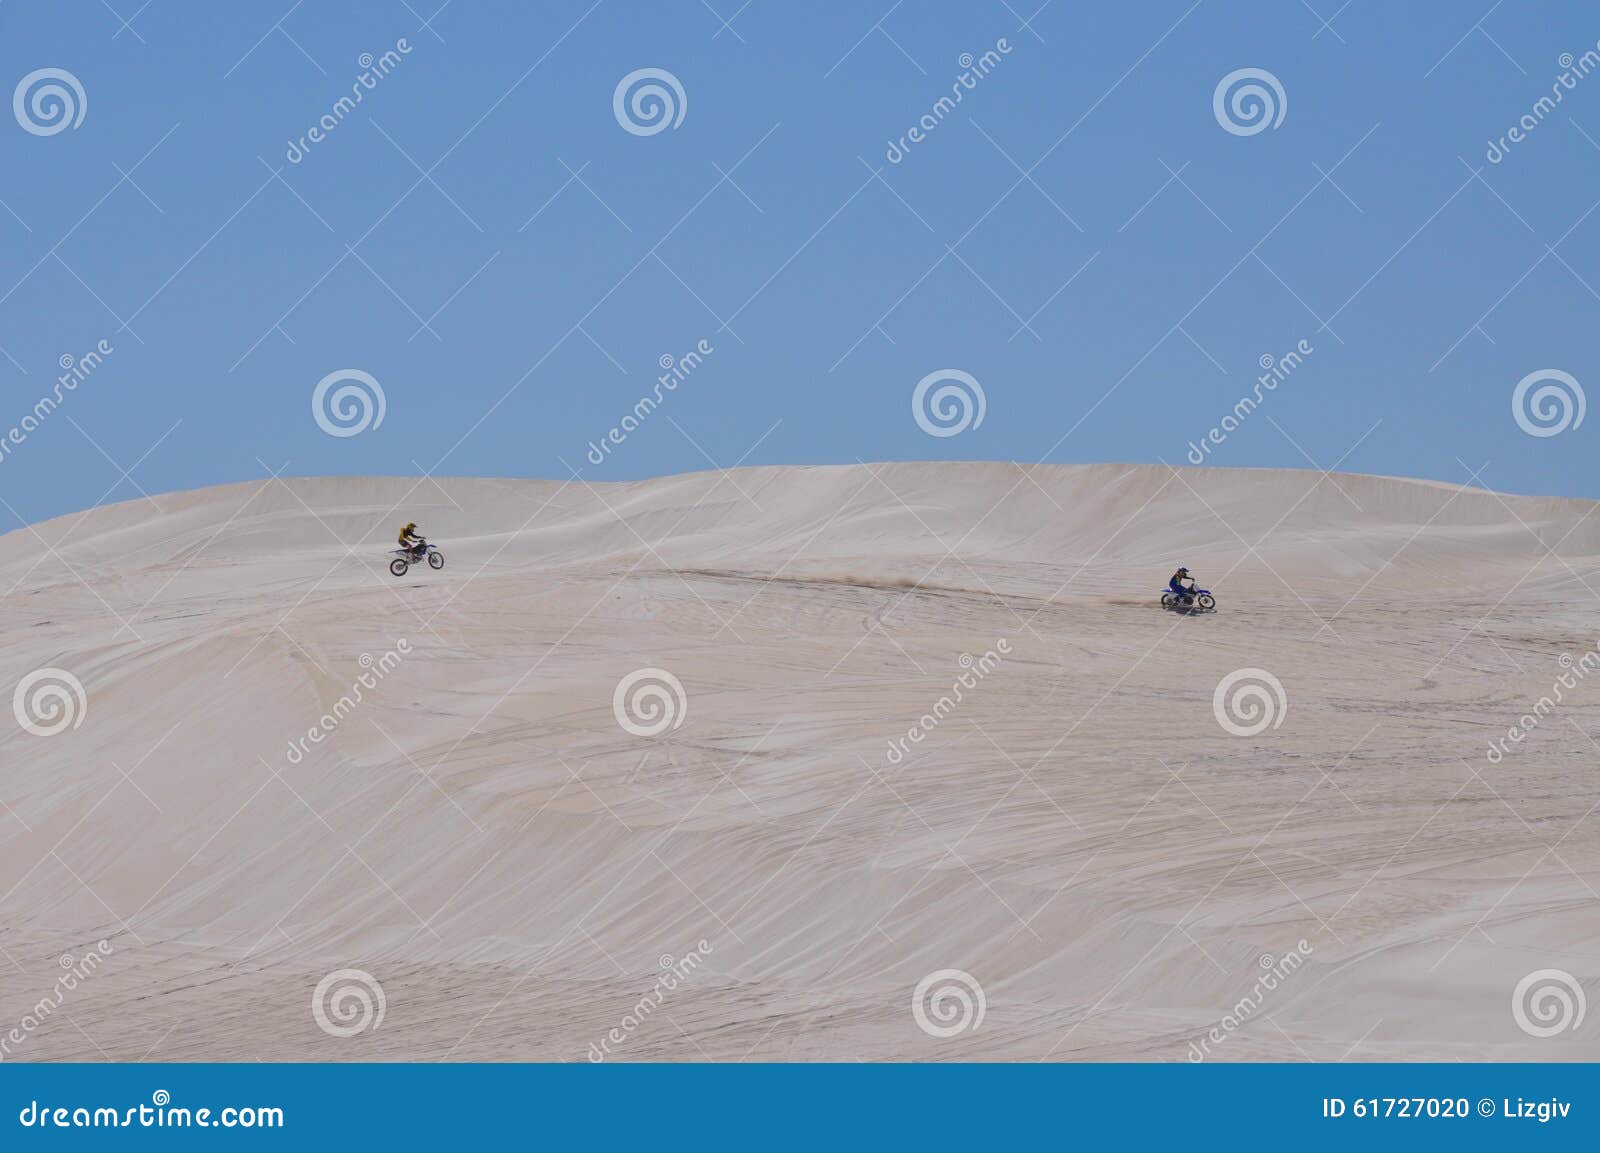 Lancelin Sand Dunes Recreation in Western Australia Editorial Image ...